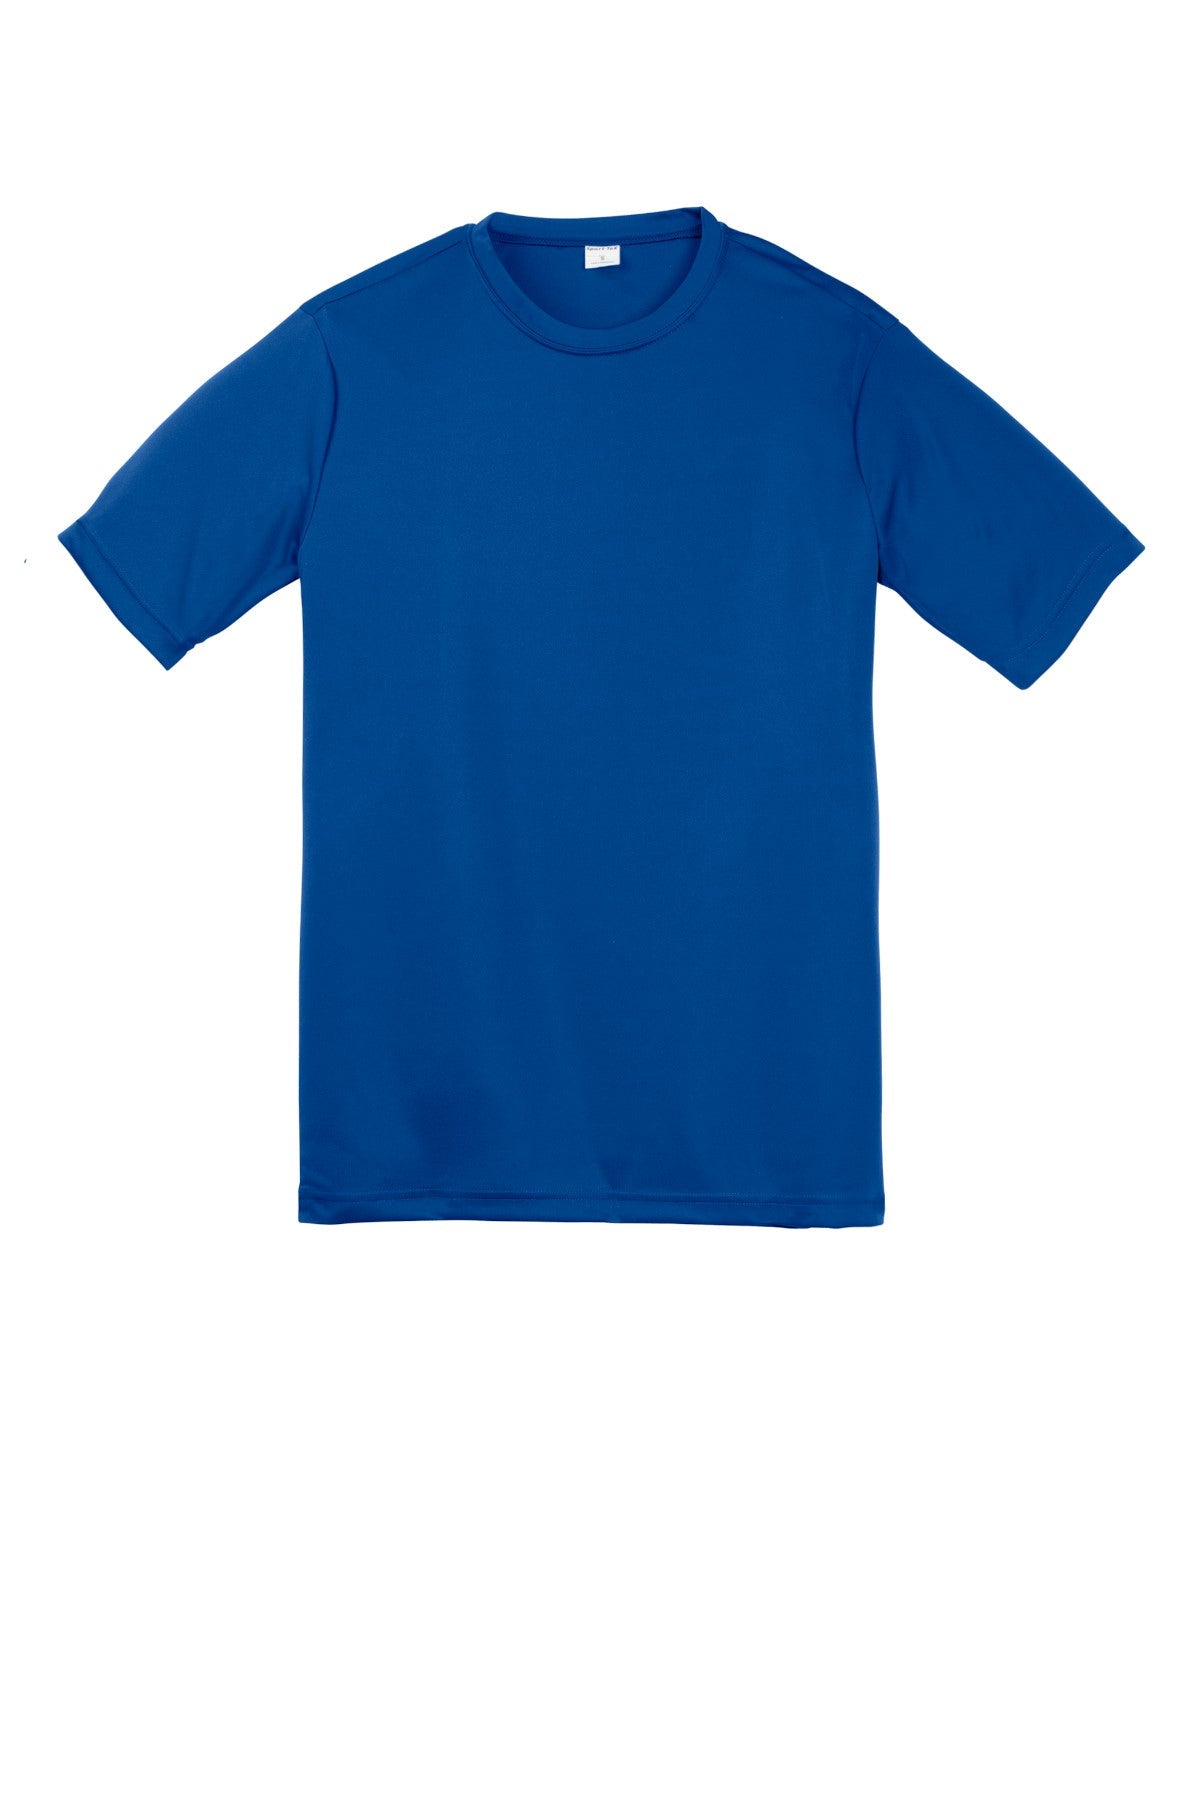 Sport-Tek Yst350 Polyester Youth T-Shirt Yth Small / True Royal